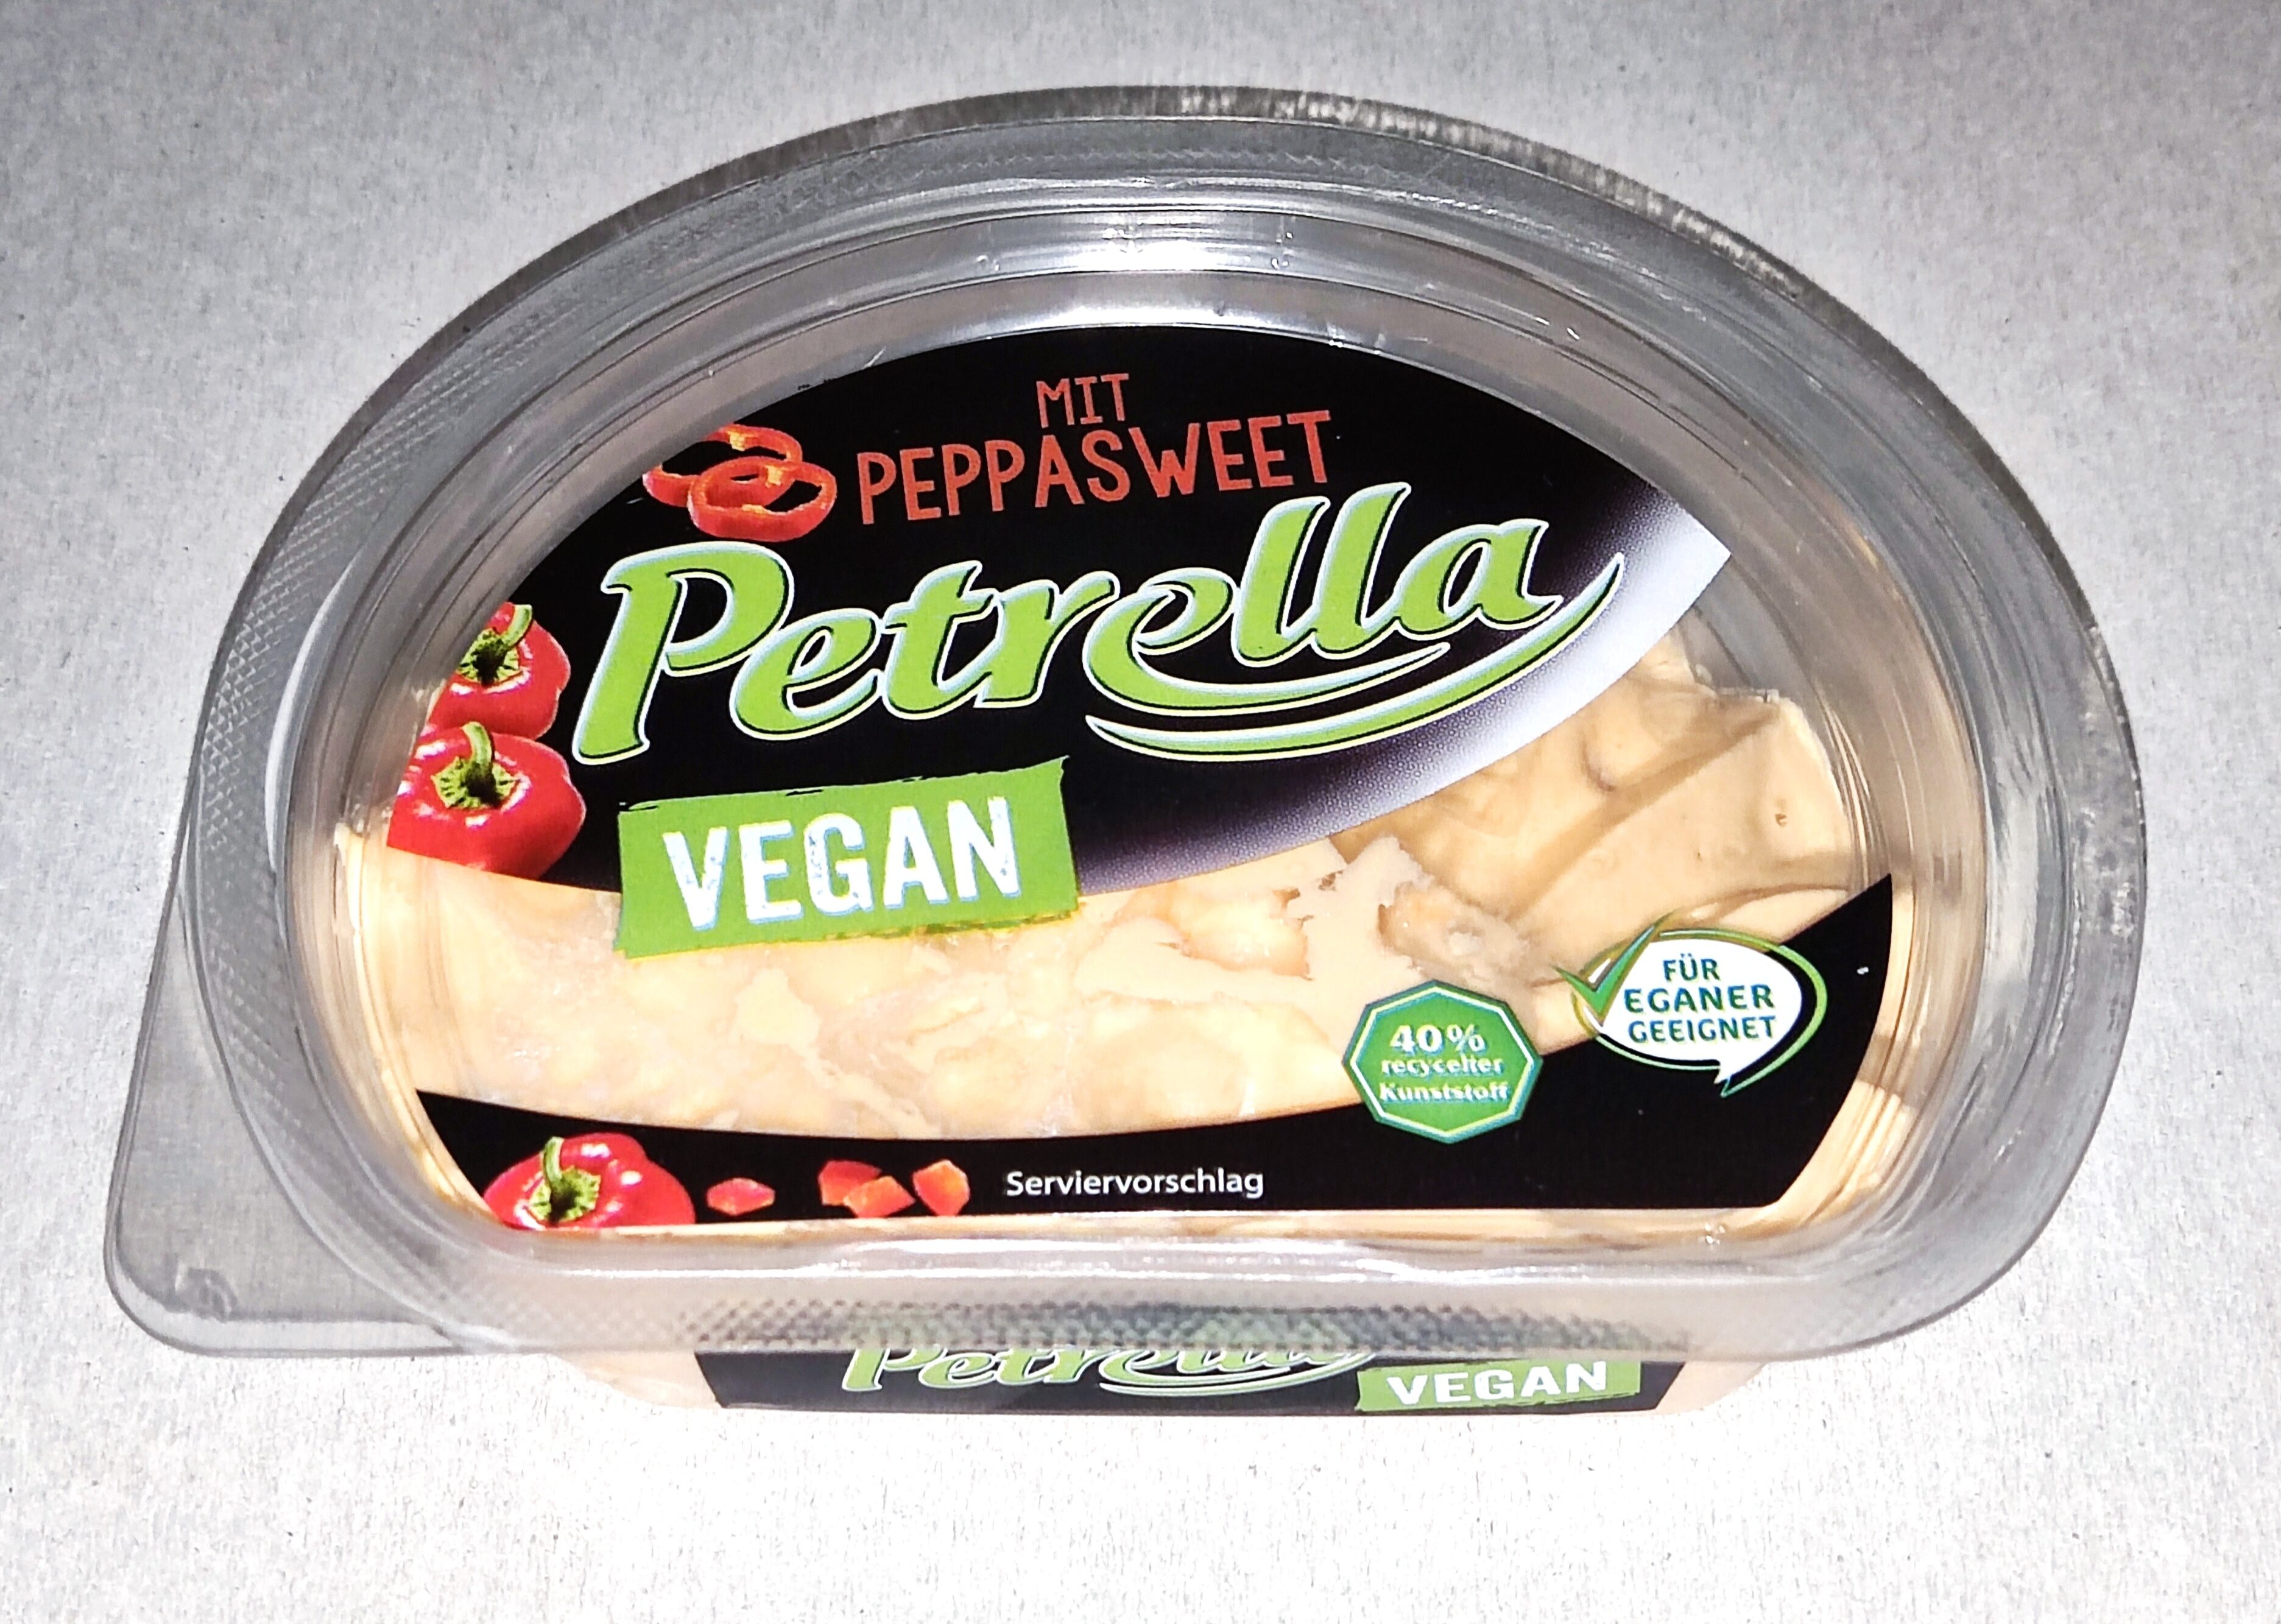 Petrella Vegan mit Peppasweet - Produkt